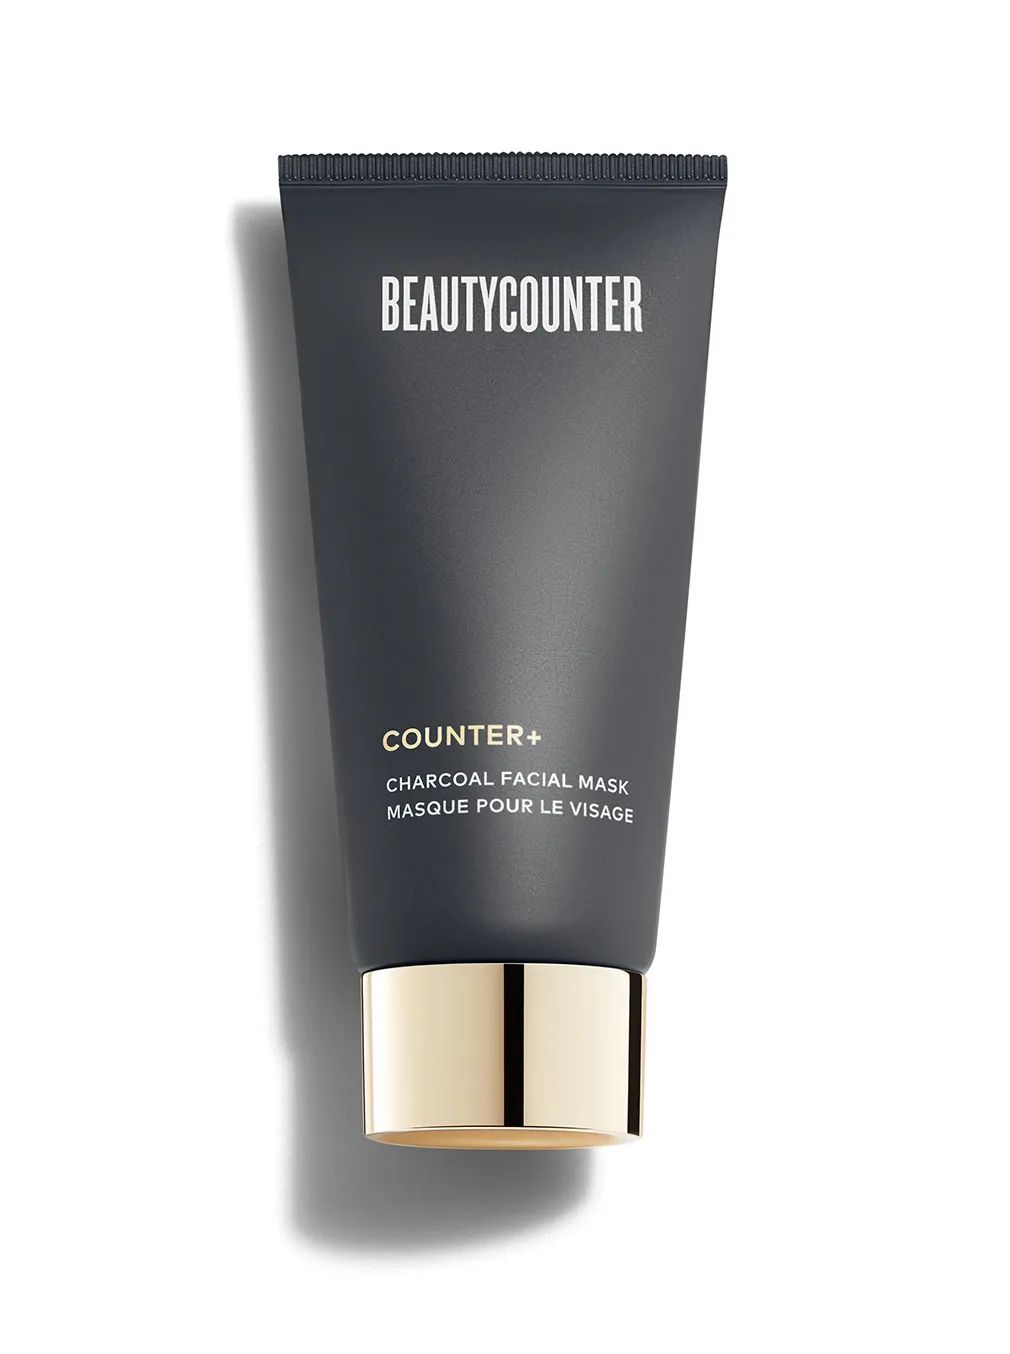 Counter+ Charcoal Facial Mask - Beautycounter - Skin Care, Makeup, Bath and Body and more! | Beautycounter.com